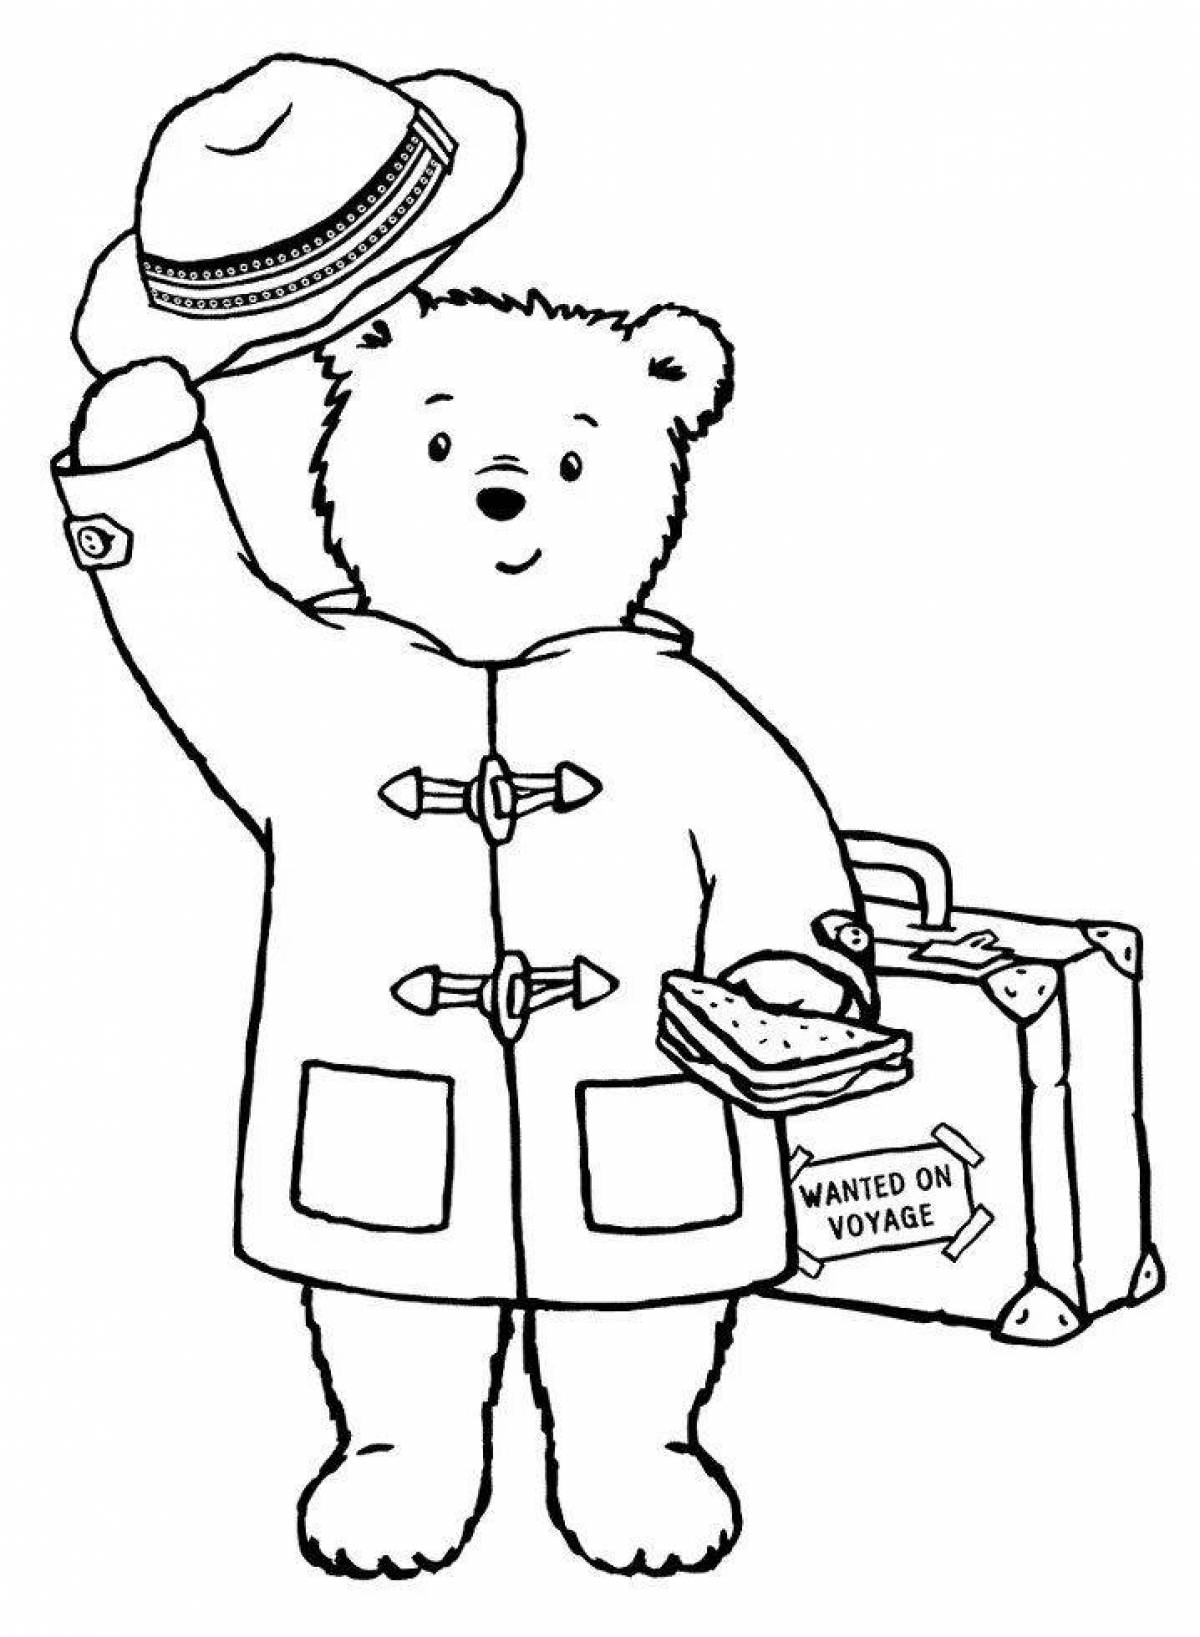 Charming paddington bear coloring book